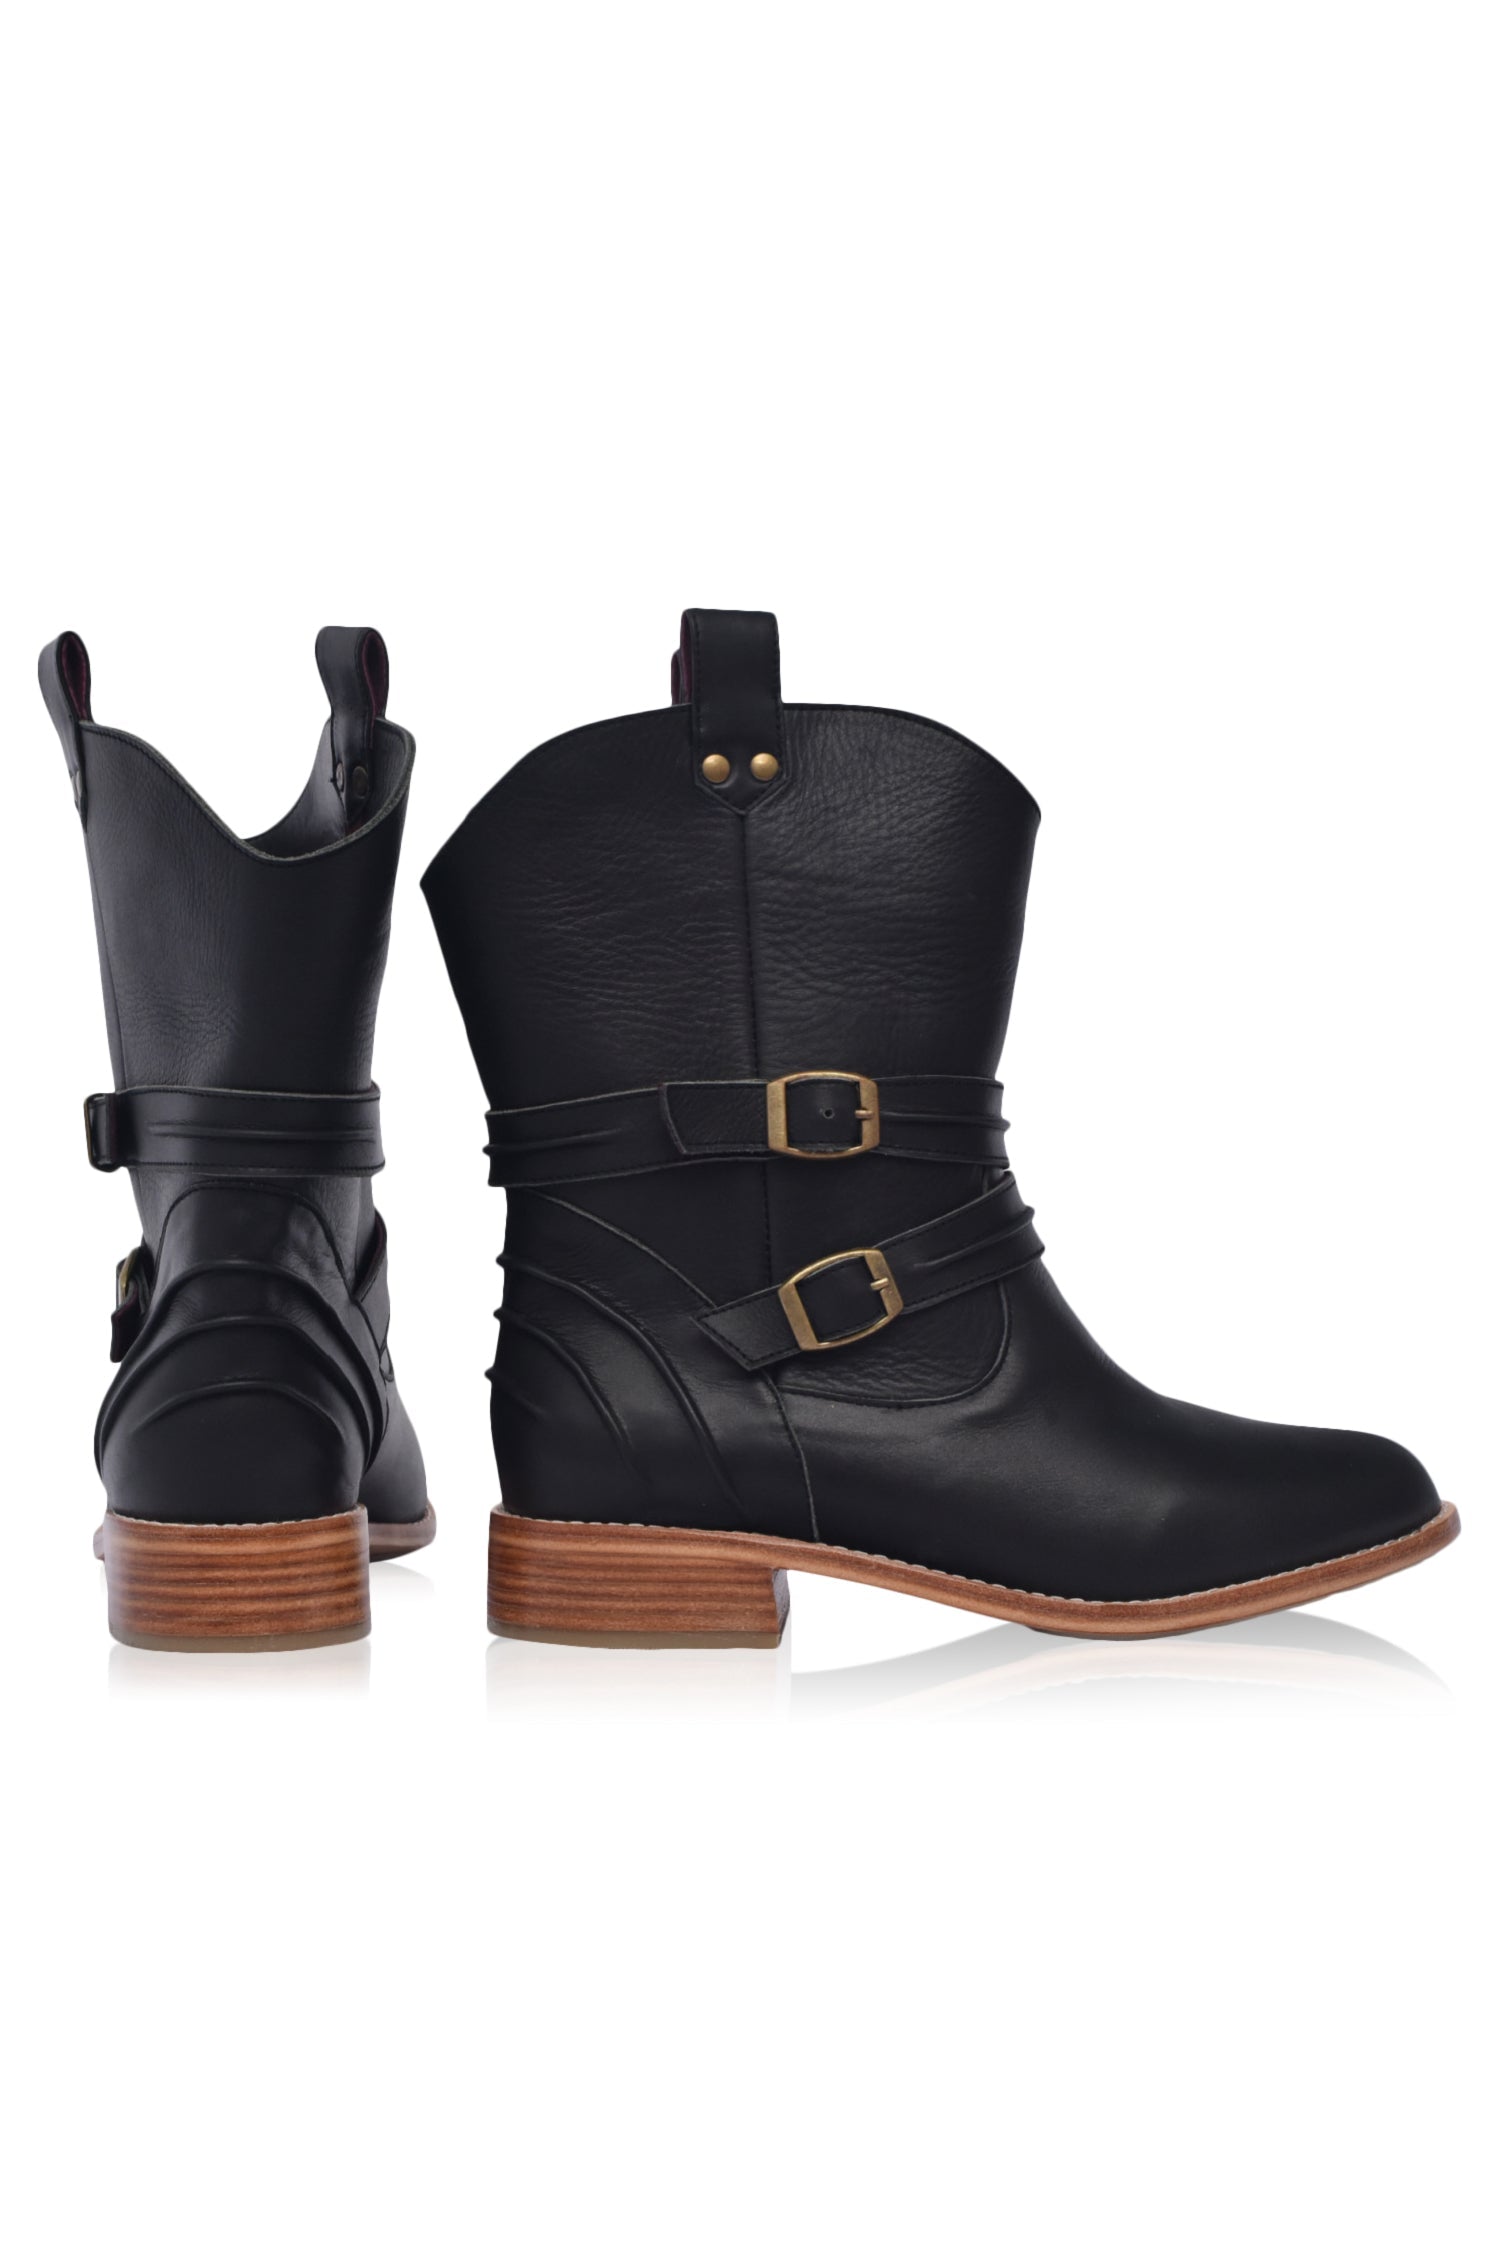 Barcelona Leather Boots (Sz. 9) ELF